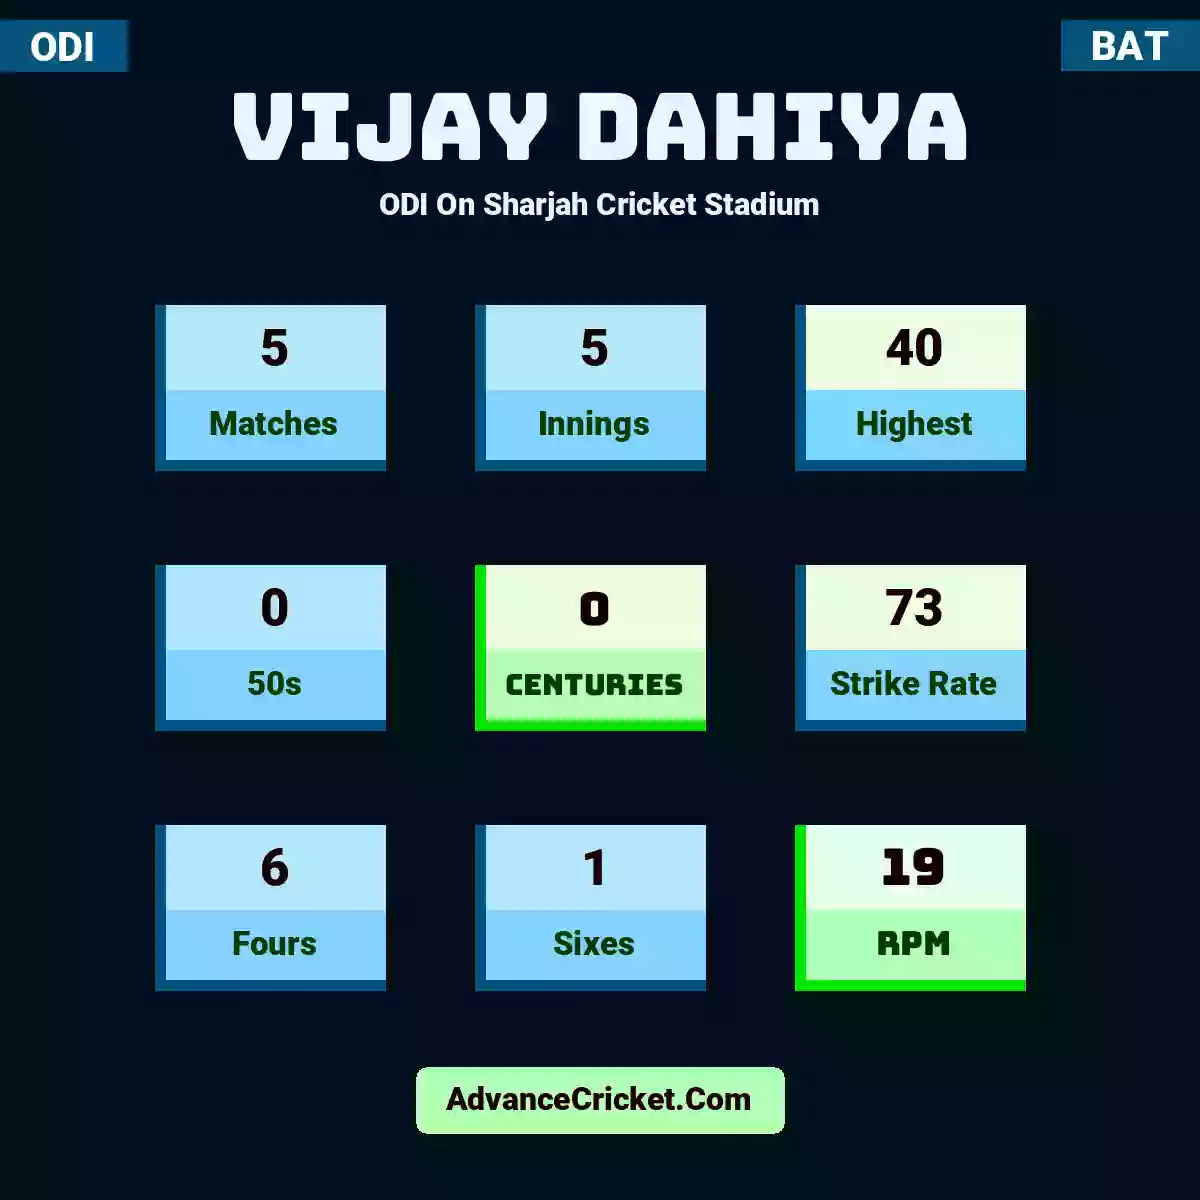 Vijay Dahiya ODI  On Sharjah Cricket Stadium, Vijay Dahiya played 5 matches, scored 40 runs as highest, 0 half-centuries, and 0 centuries, with a strike rate of 73. V.Dahiya hit 6 fours and 1 sixes, with an RPM of 19.